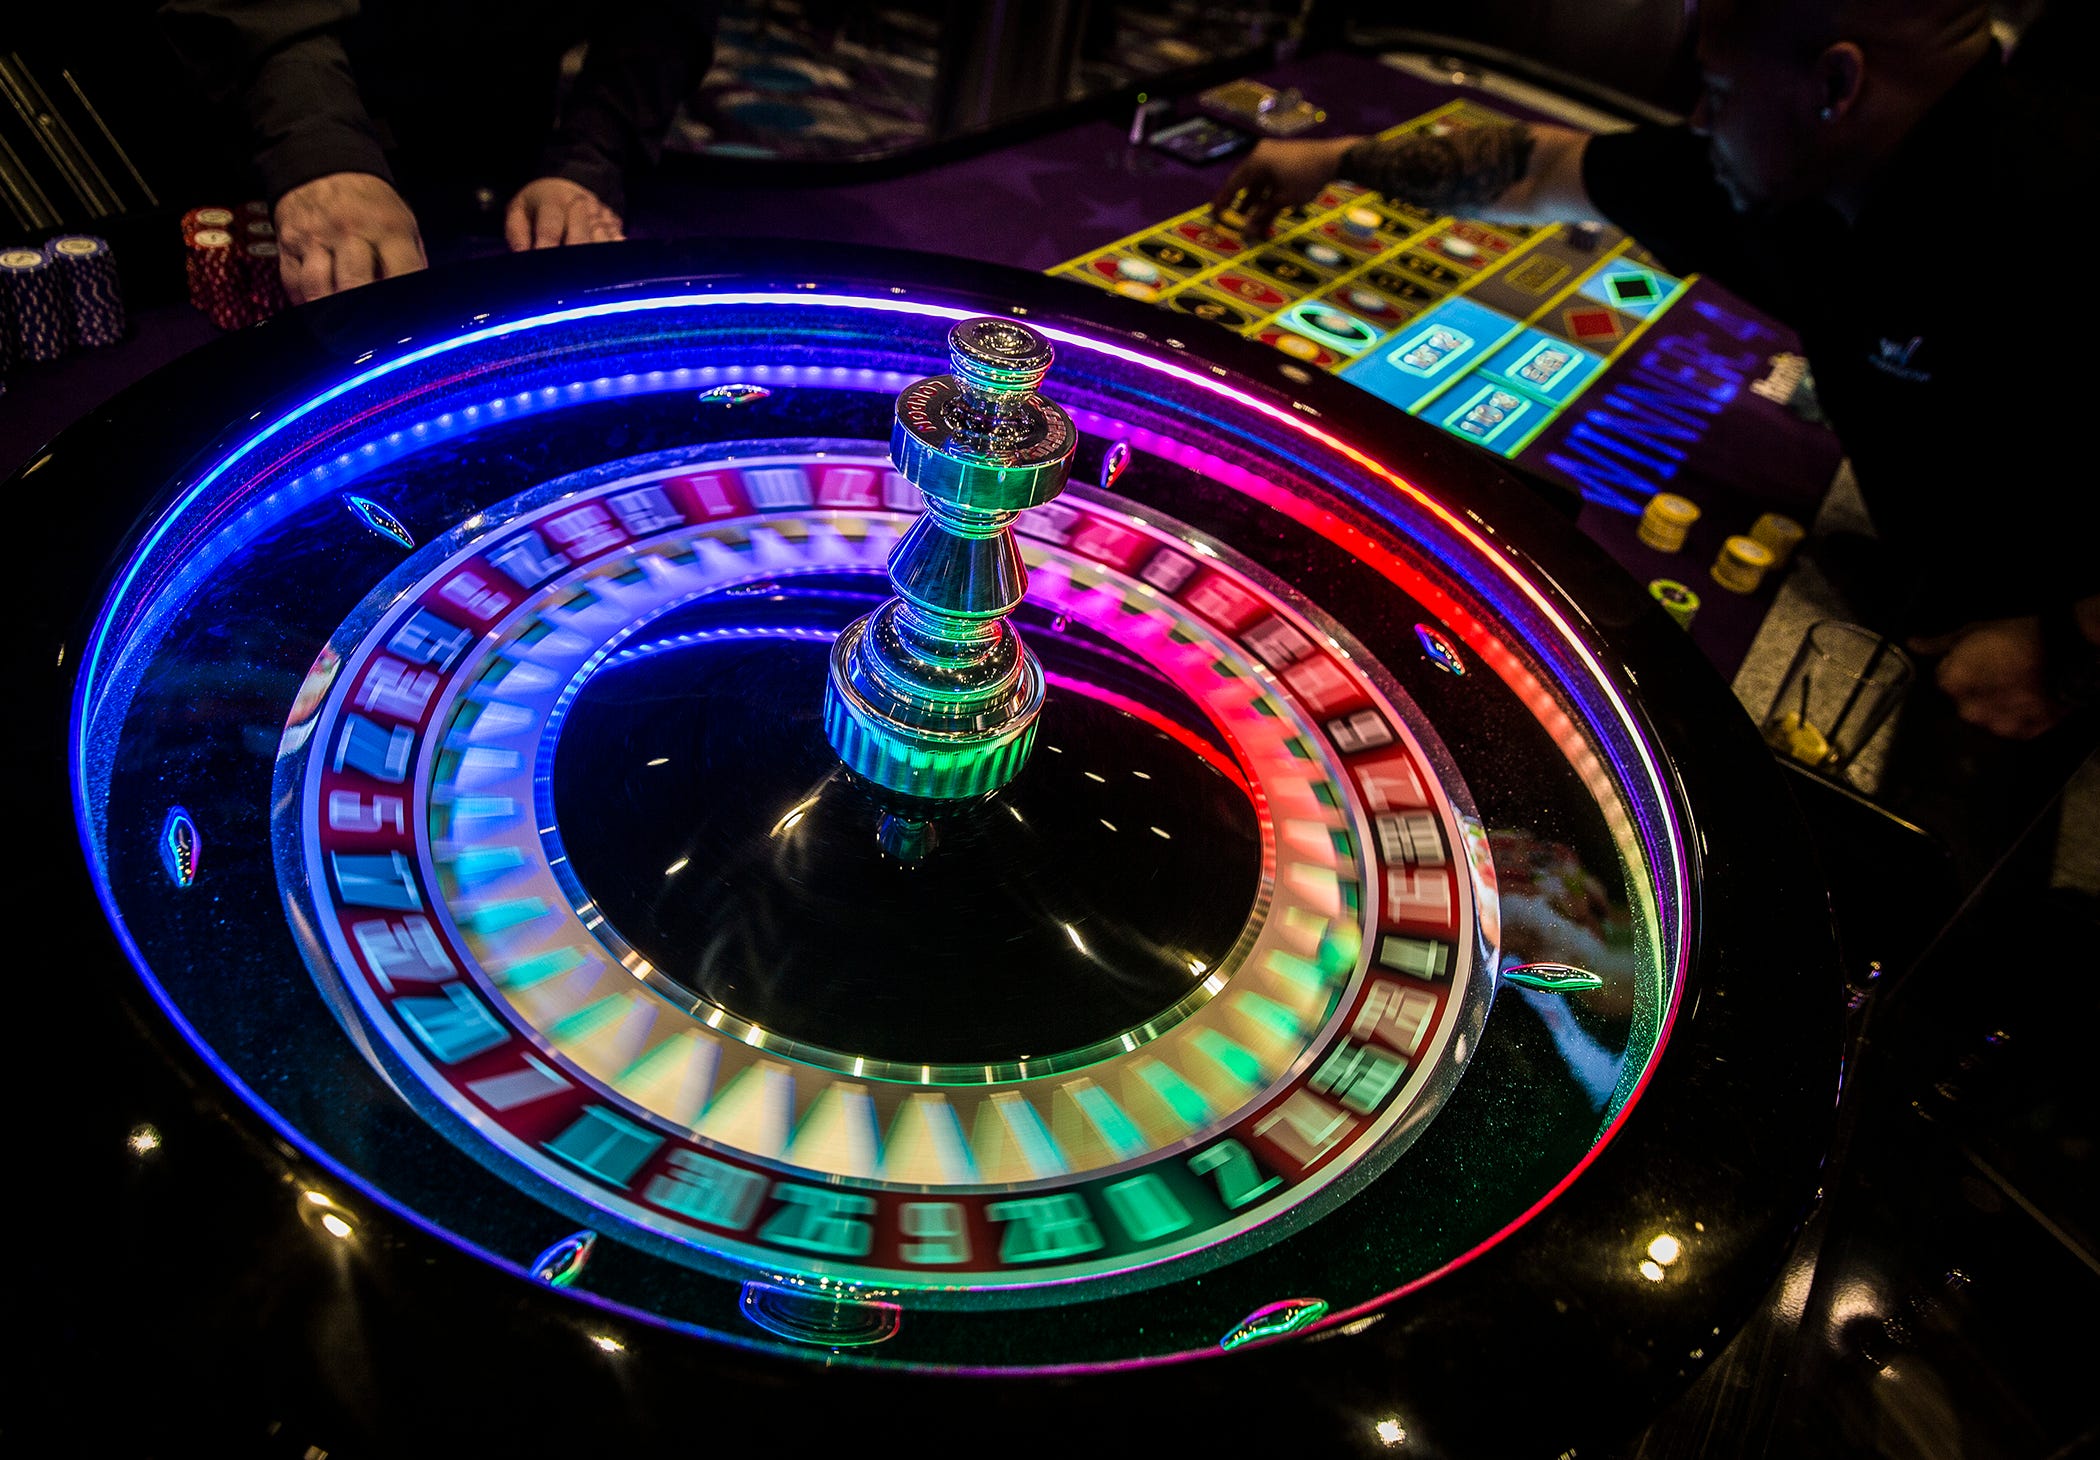 Vòng quay đầy màu sắc của Roulette casino thực tế